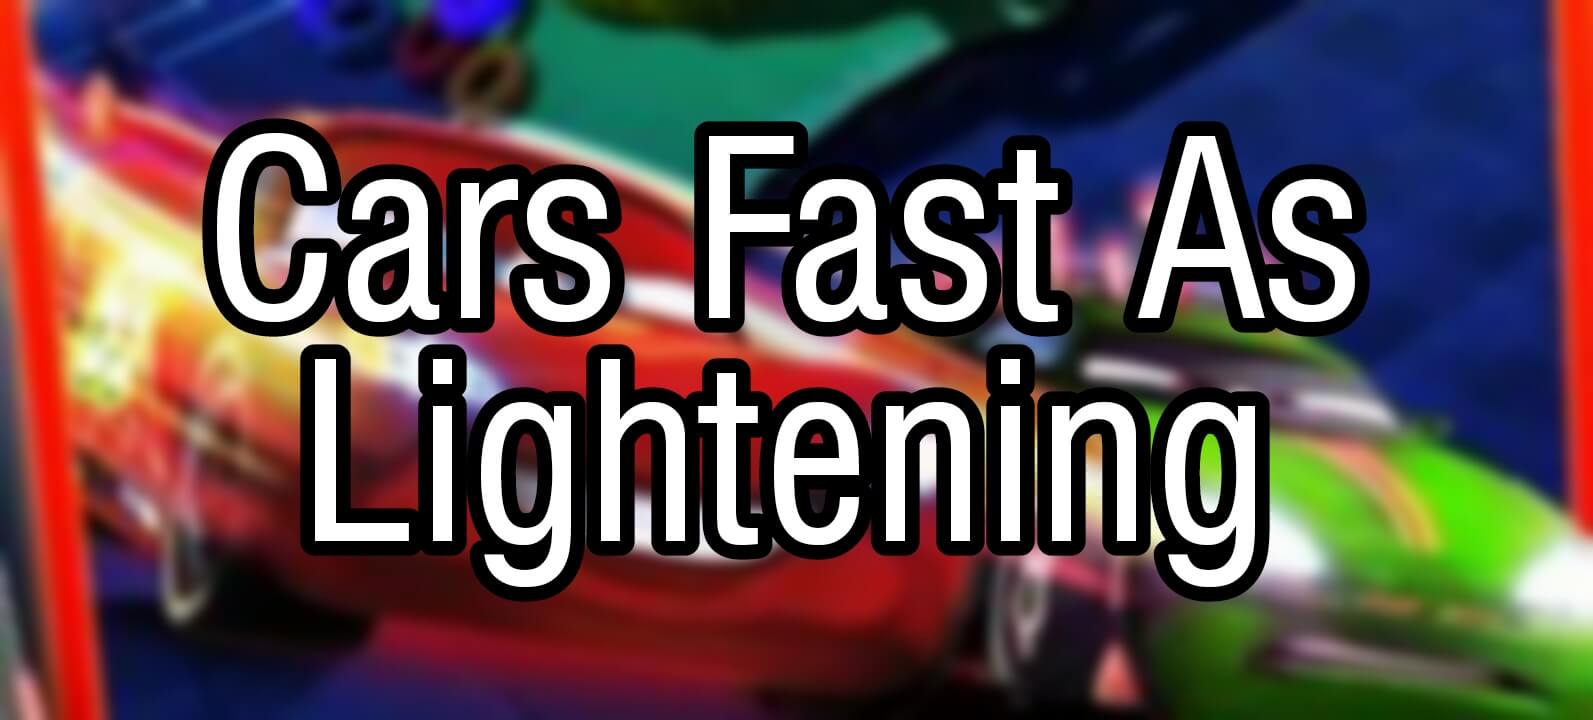 Cars Fast As Lightening 